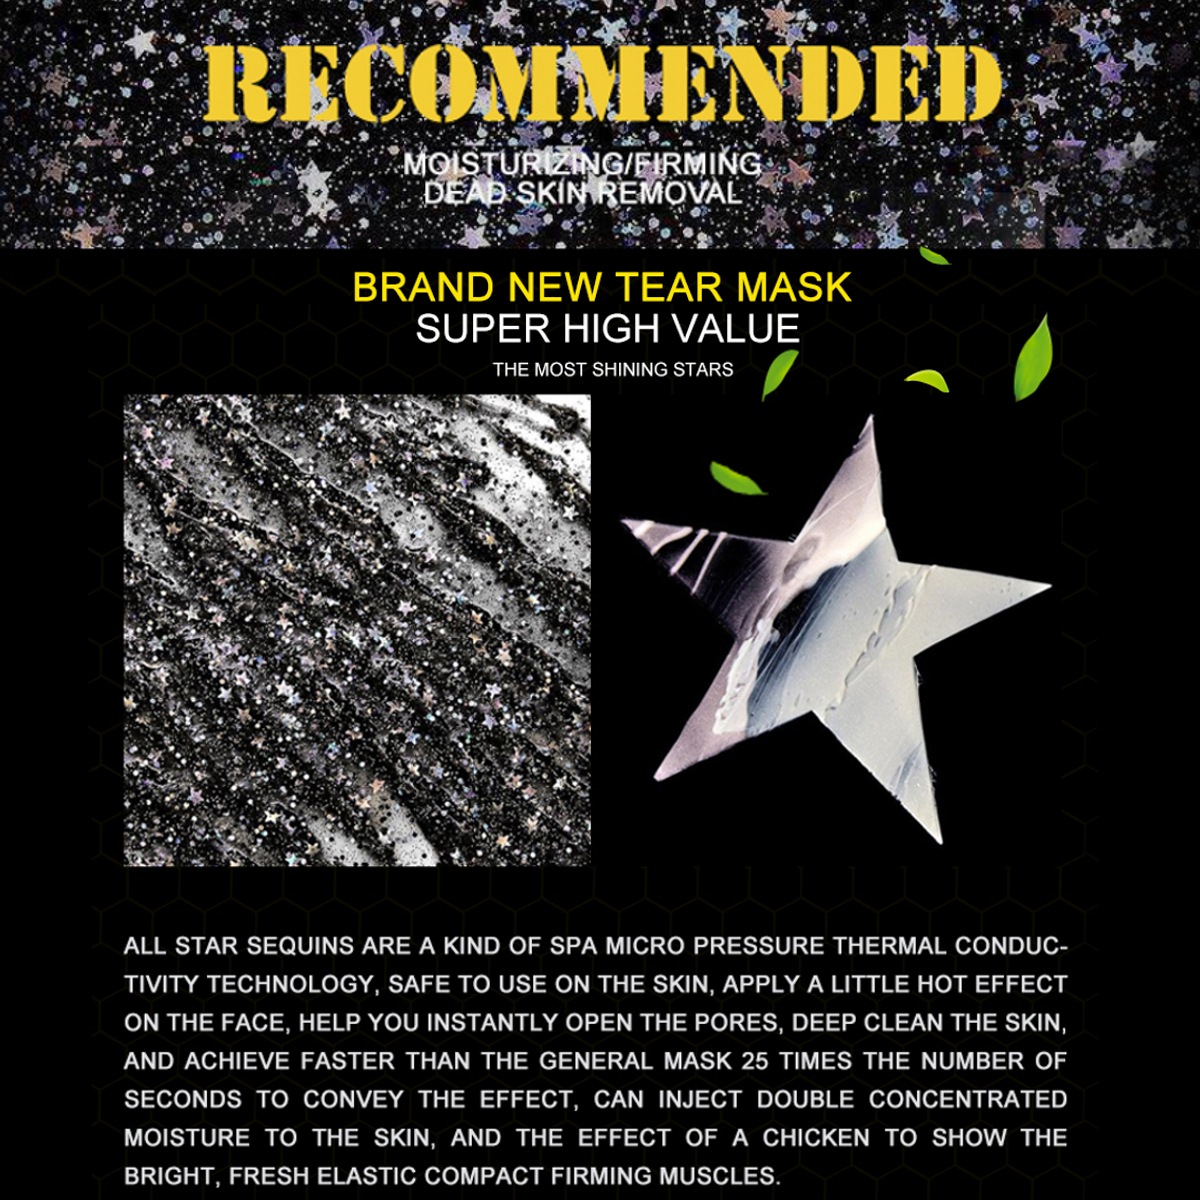 50ml Star Mask Anti Aging Blackhead Moisturize